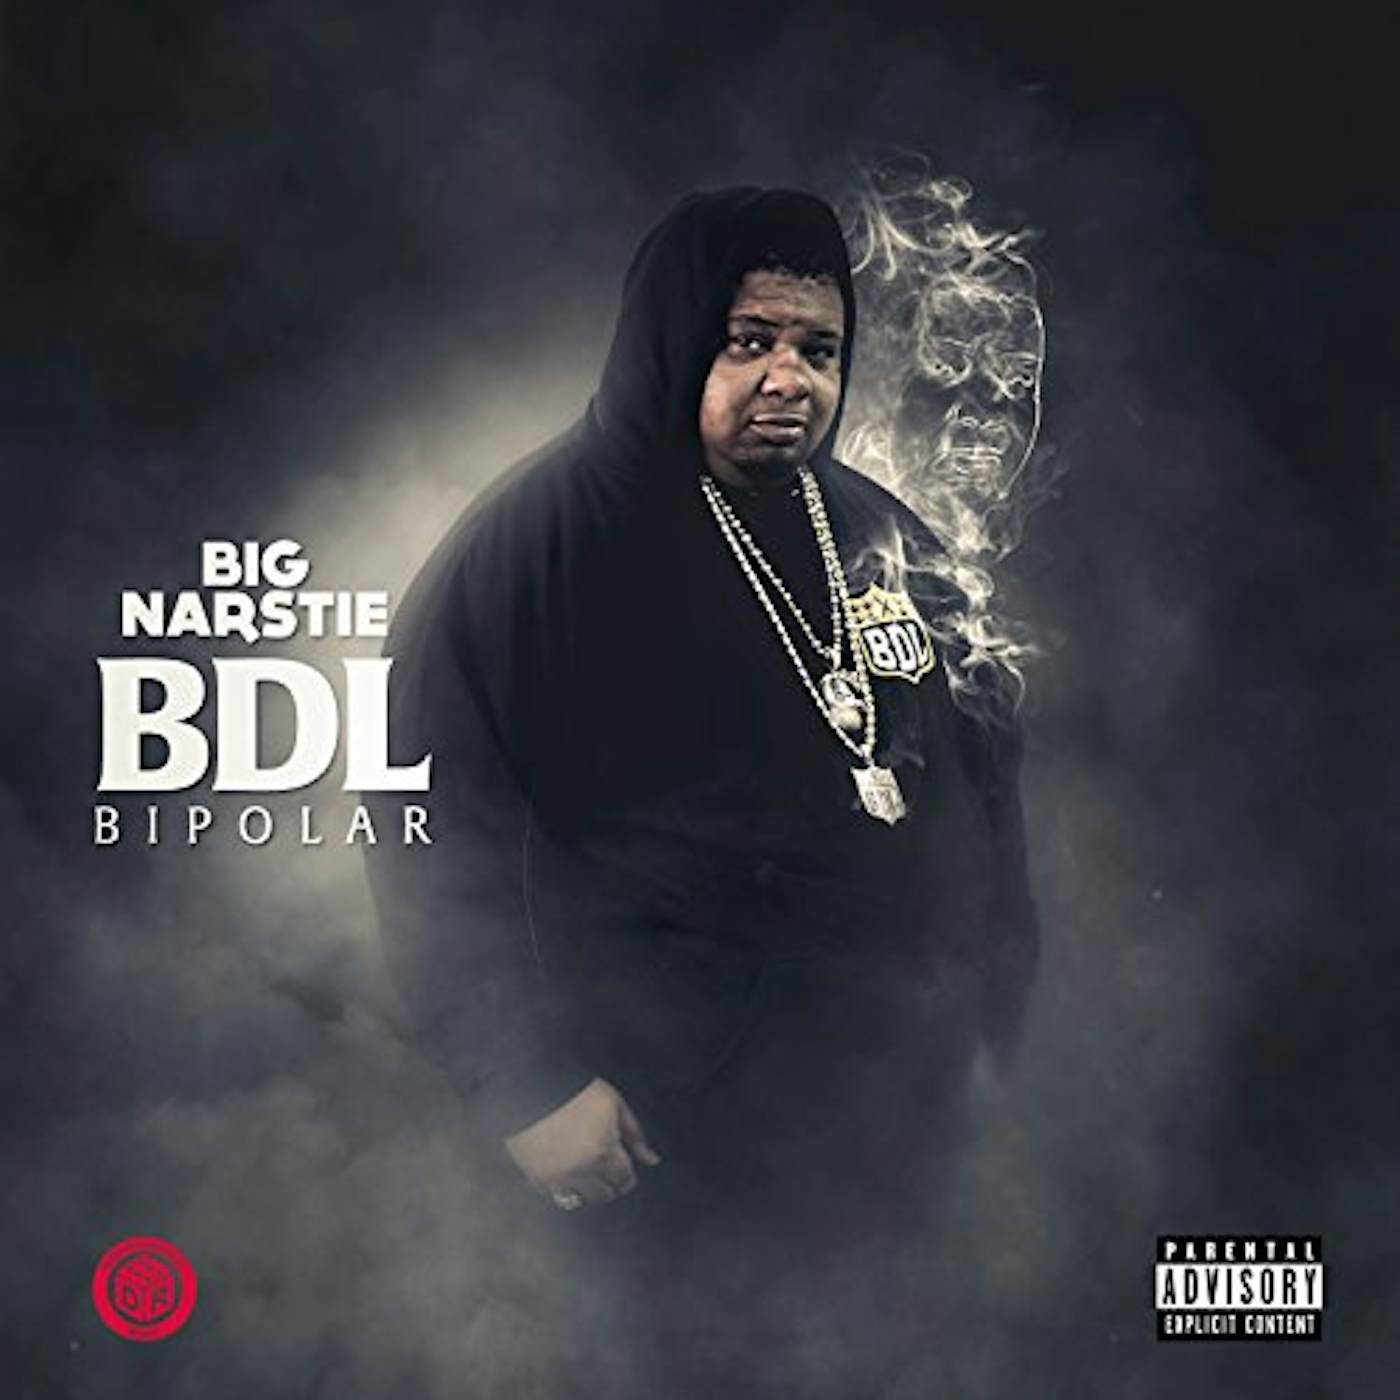 Big Narstie BDL BIPOLAR CD